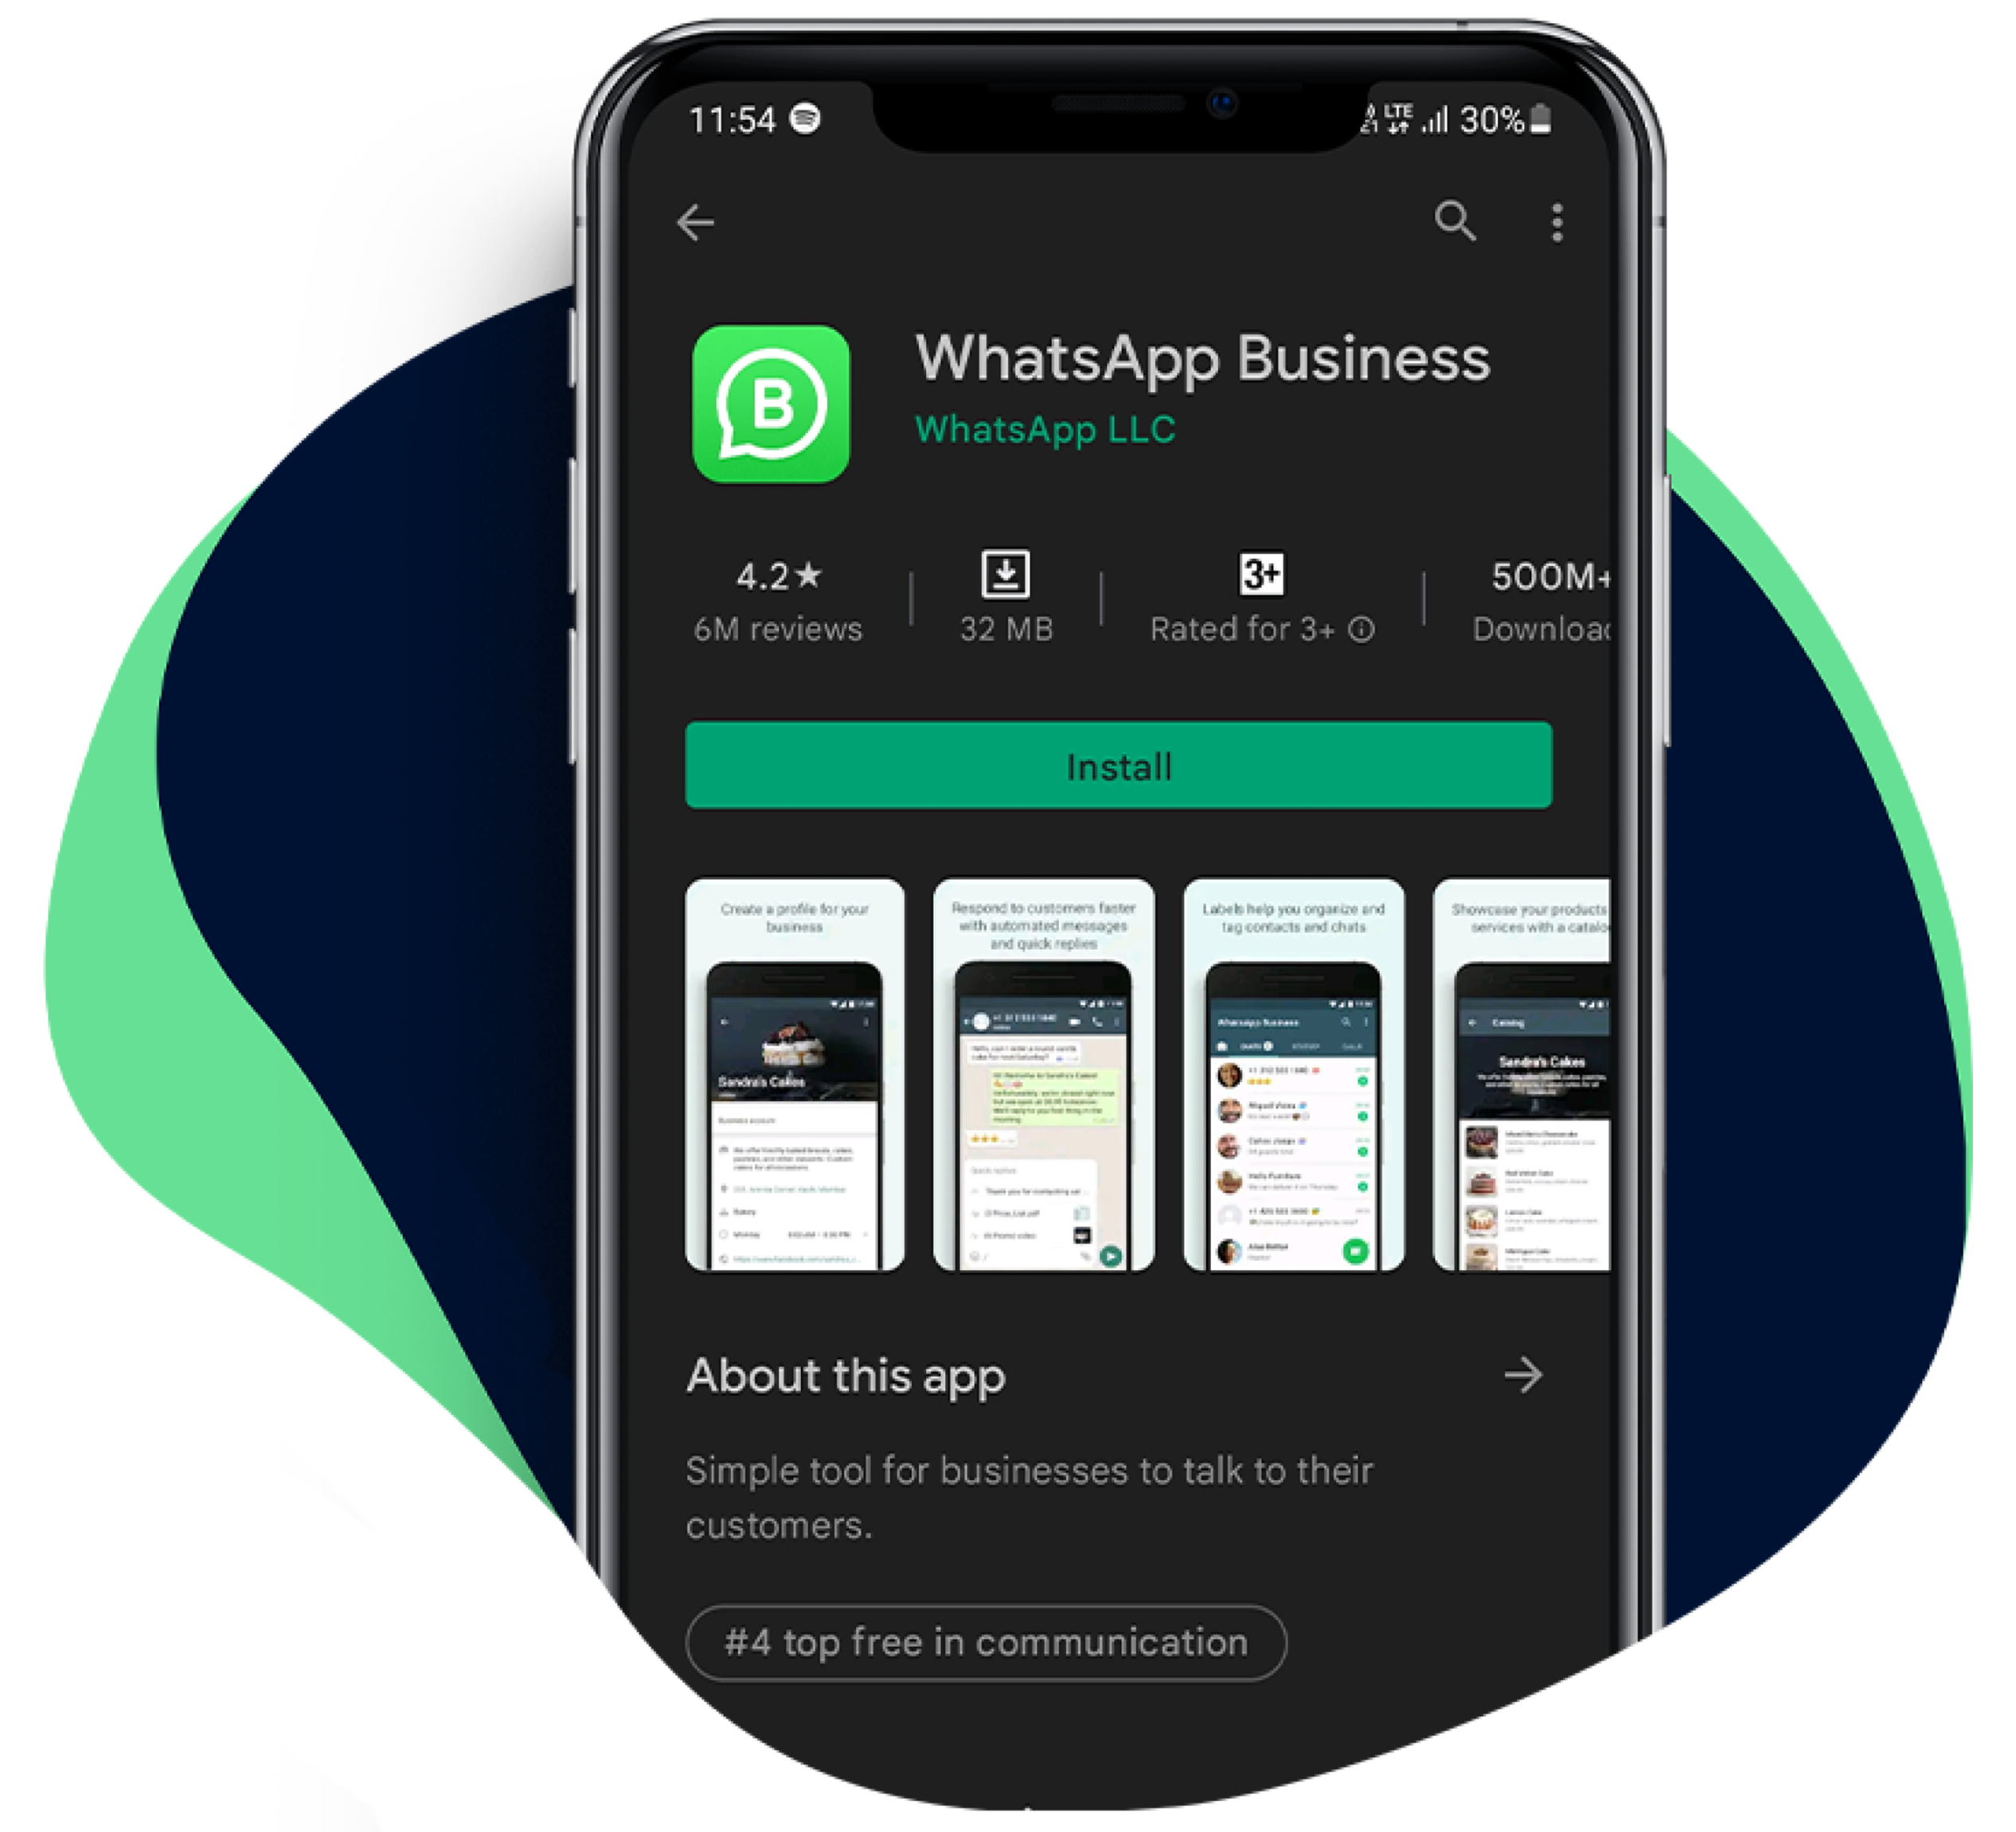 Scheenshot of Whatsapp Business in the app store